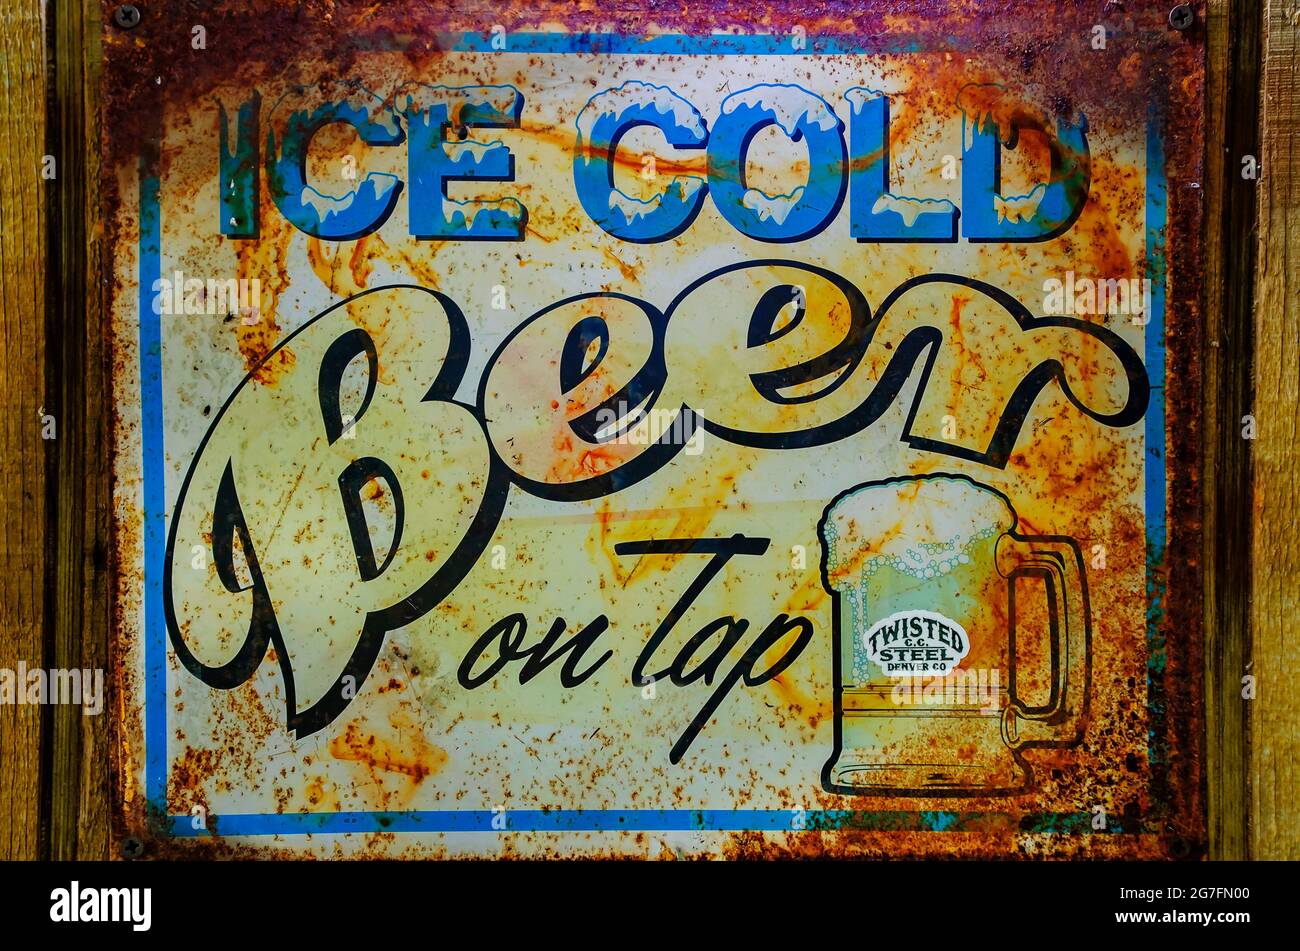 Cold Beer On Tap Best Head TIN SIGN funny retro mug art metal poster bar decor 